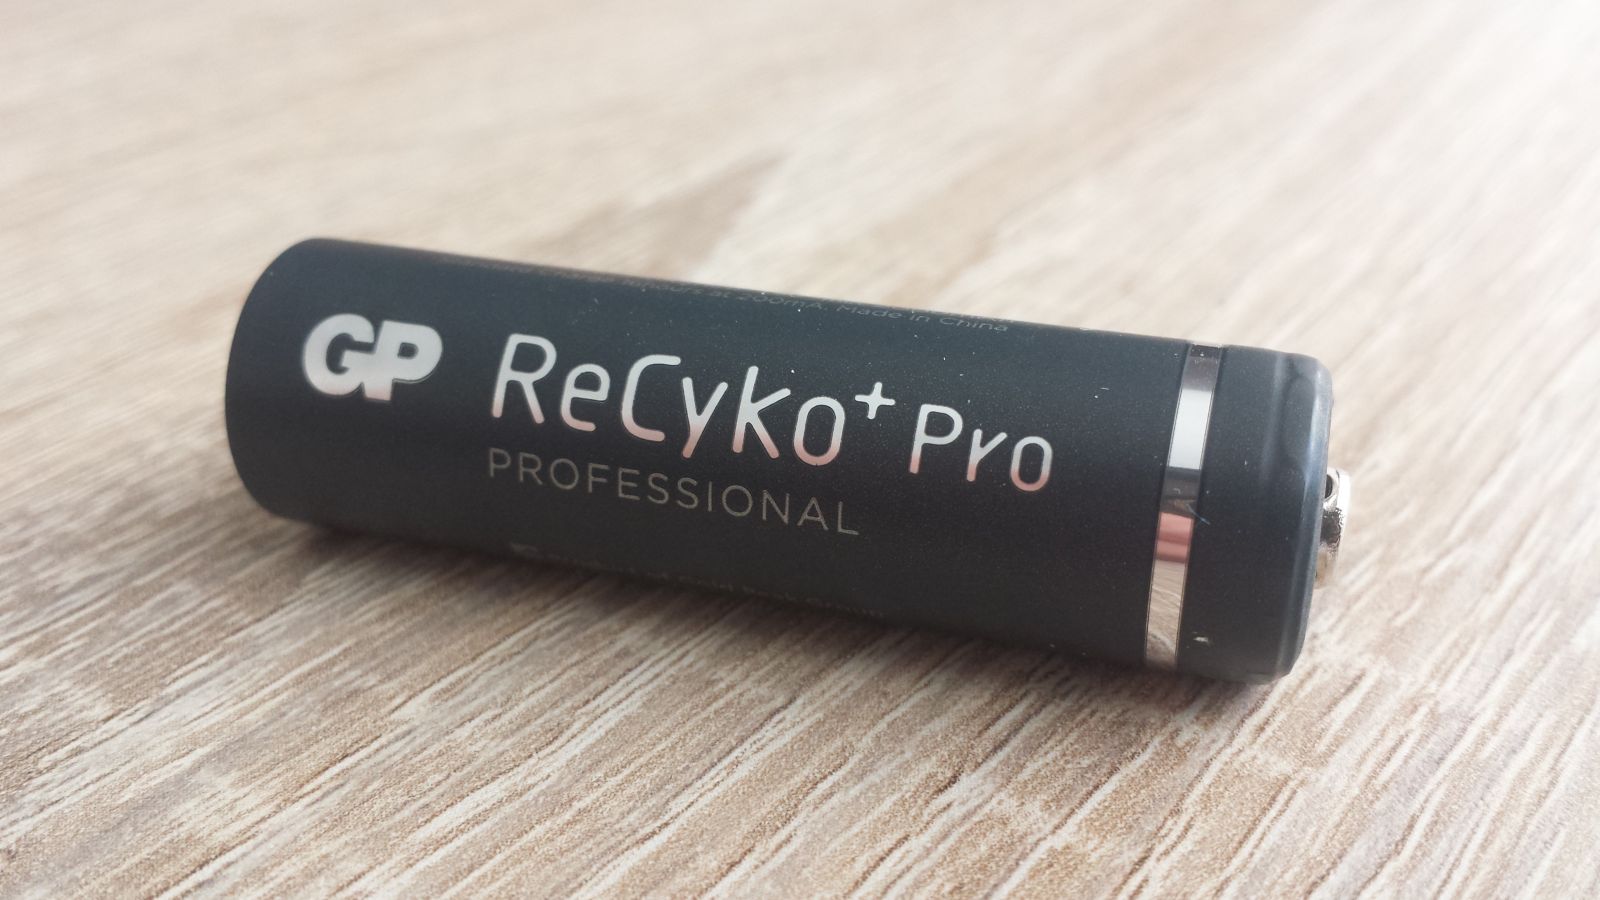 GP ReCyko+ Pro Professional